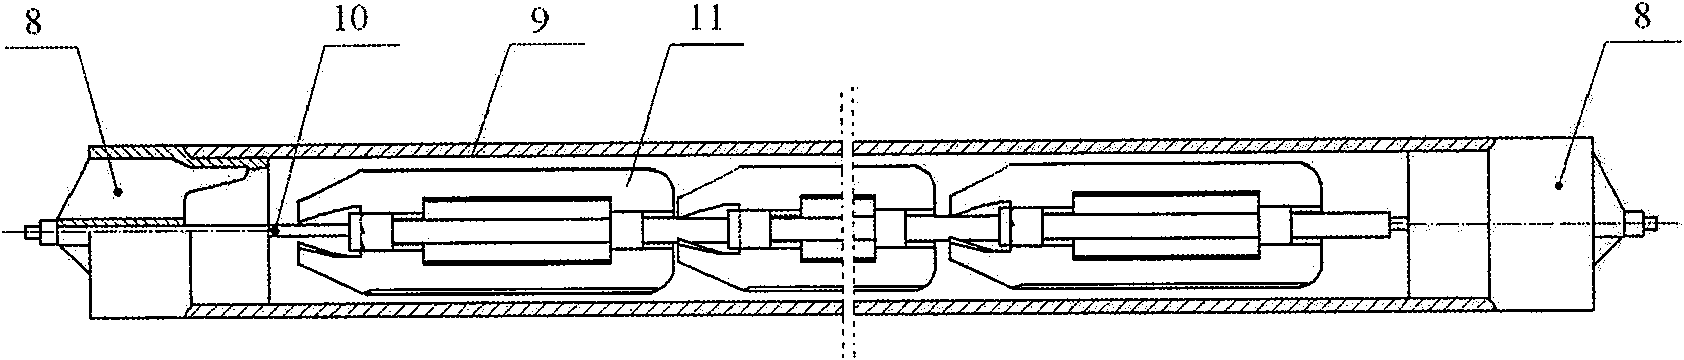 Unit-combination type heat transfer enhancement device